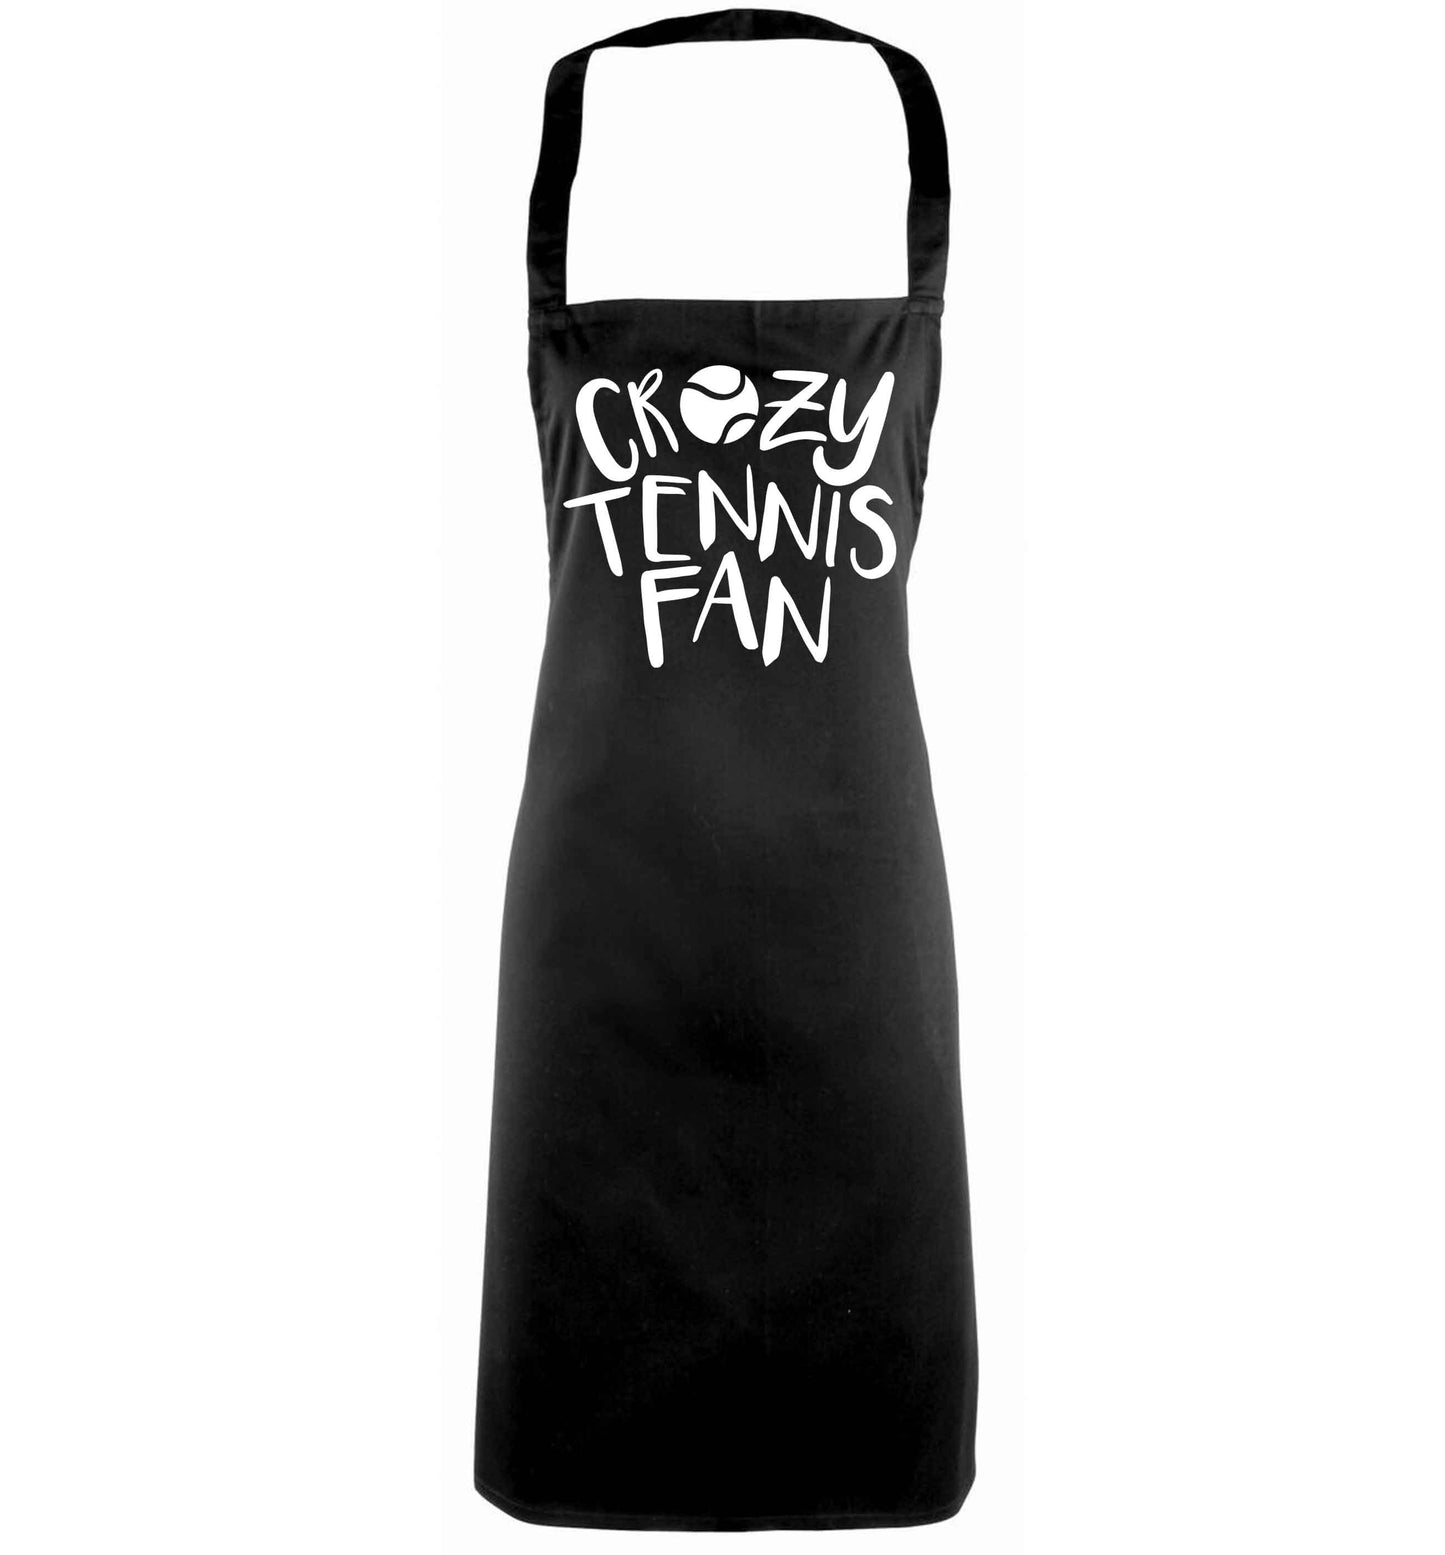 Crazy tennis fan black apron